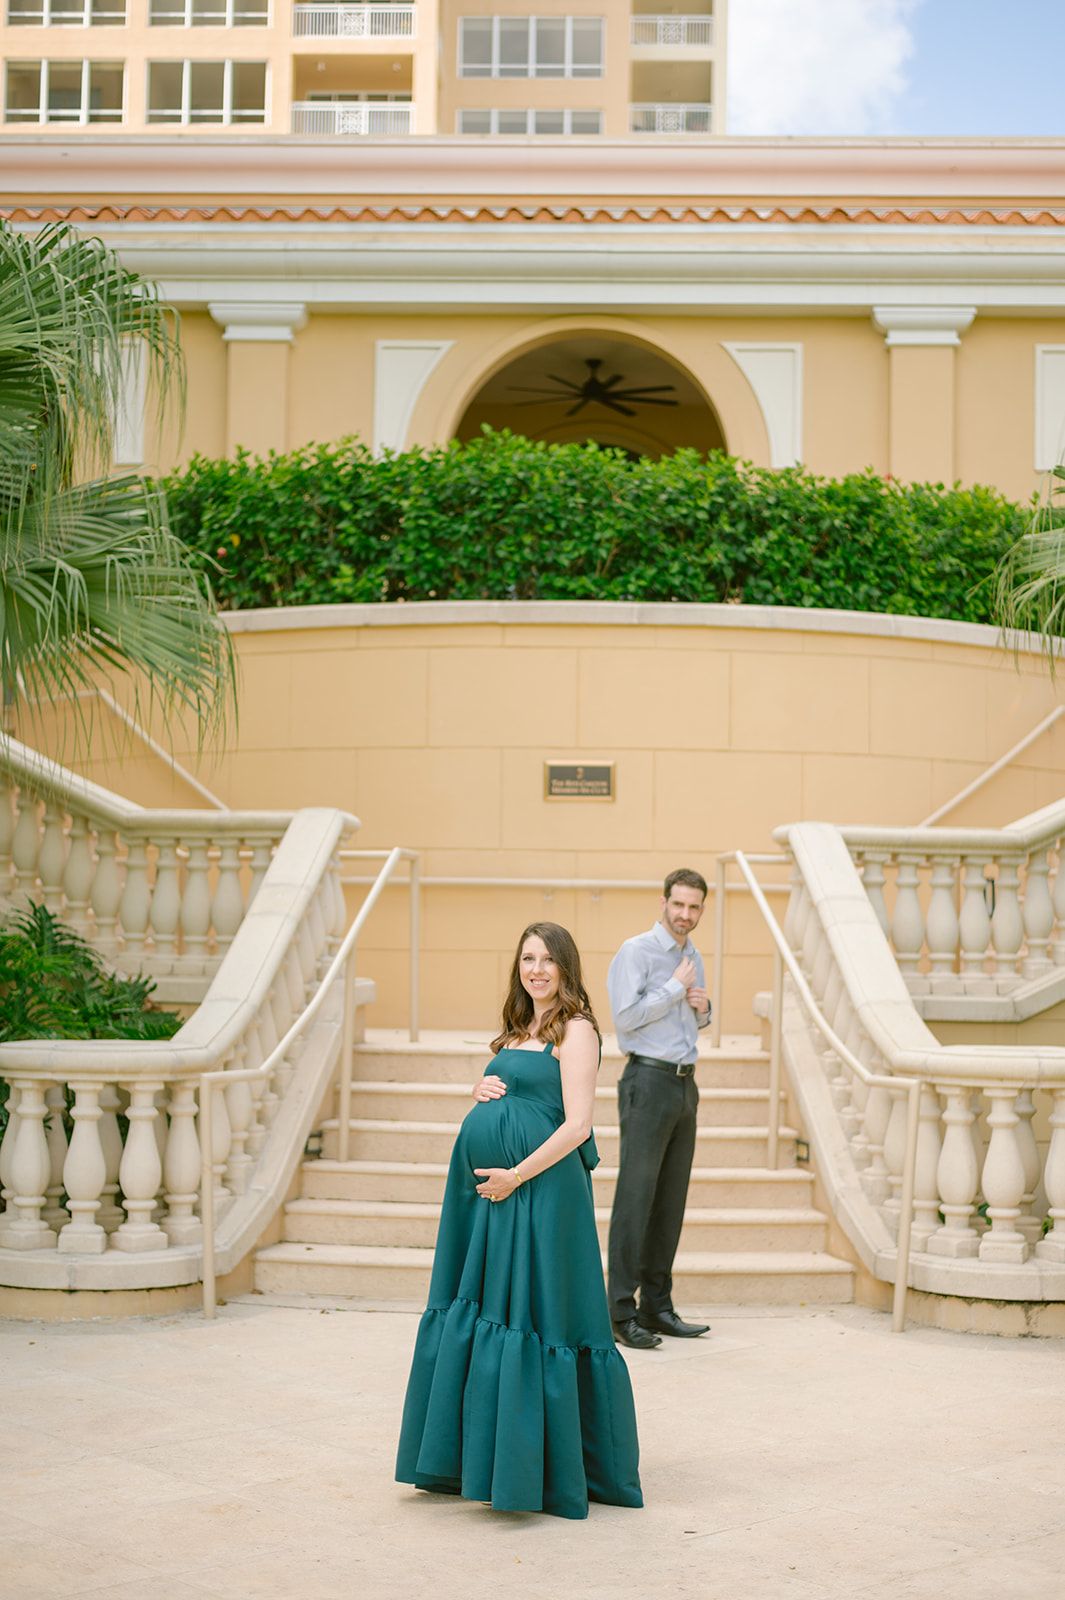 Amanda's maternity photoshoot in her stunning green dress at The Ritz Carlton